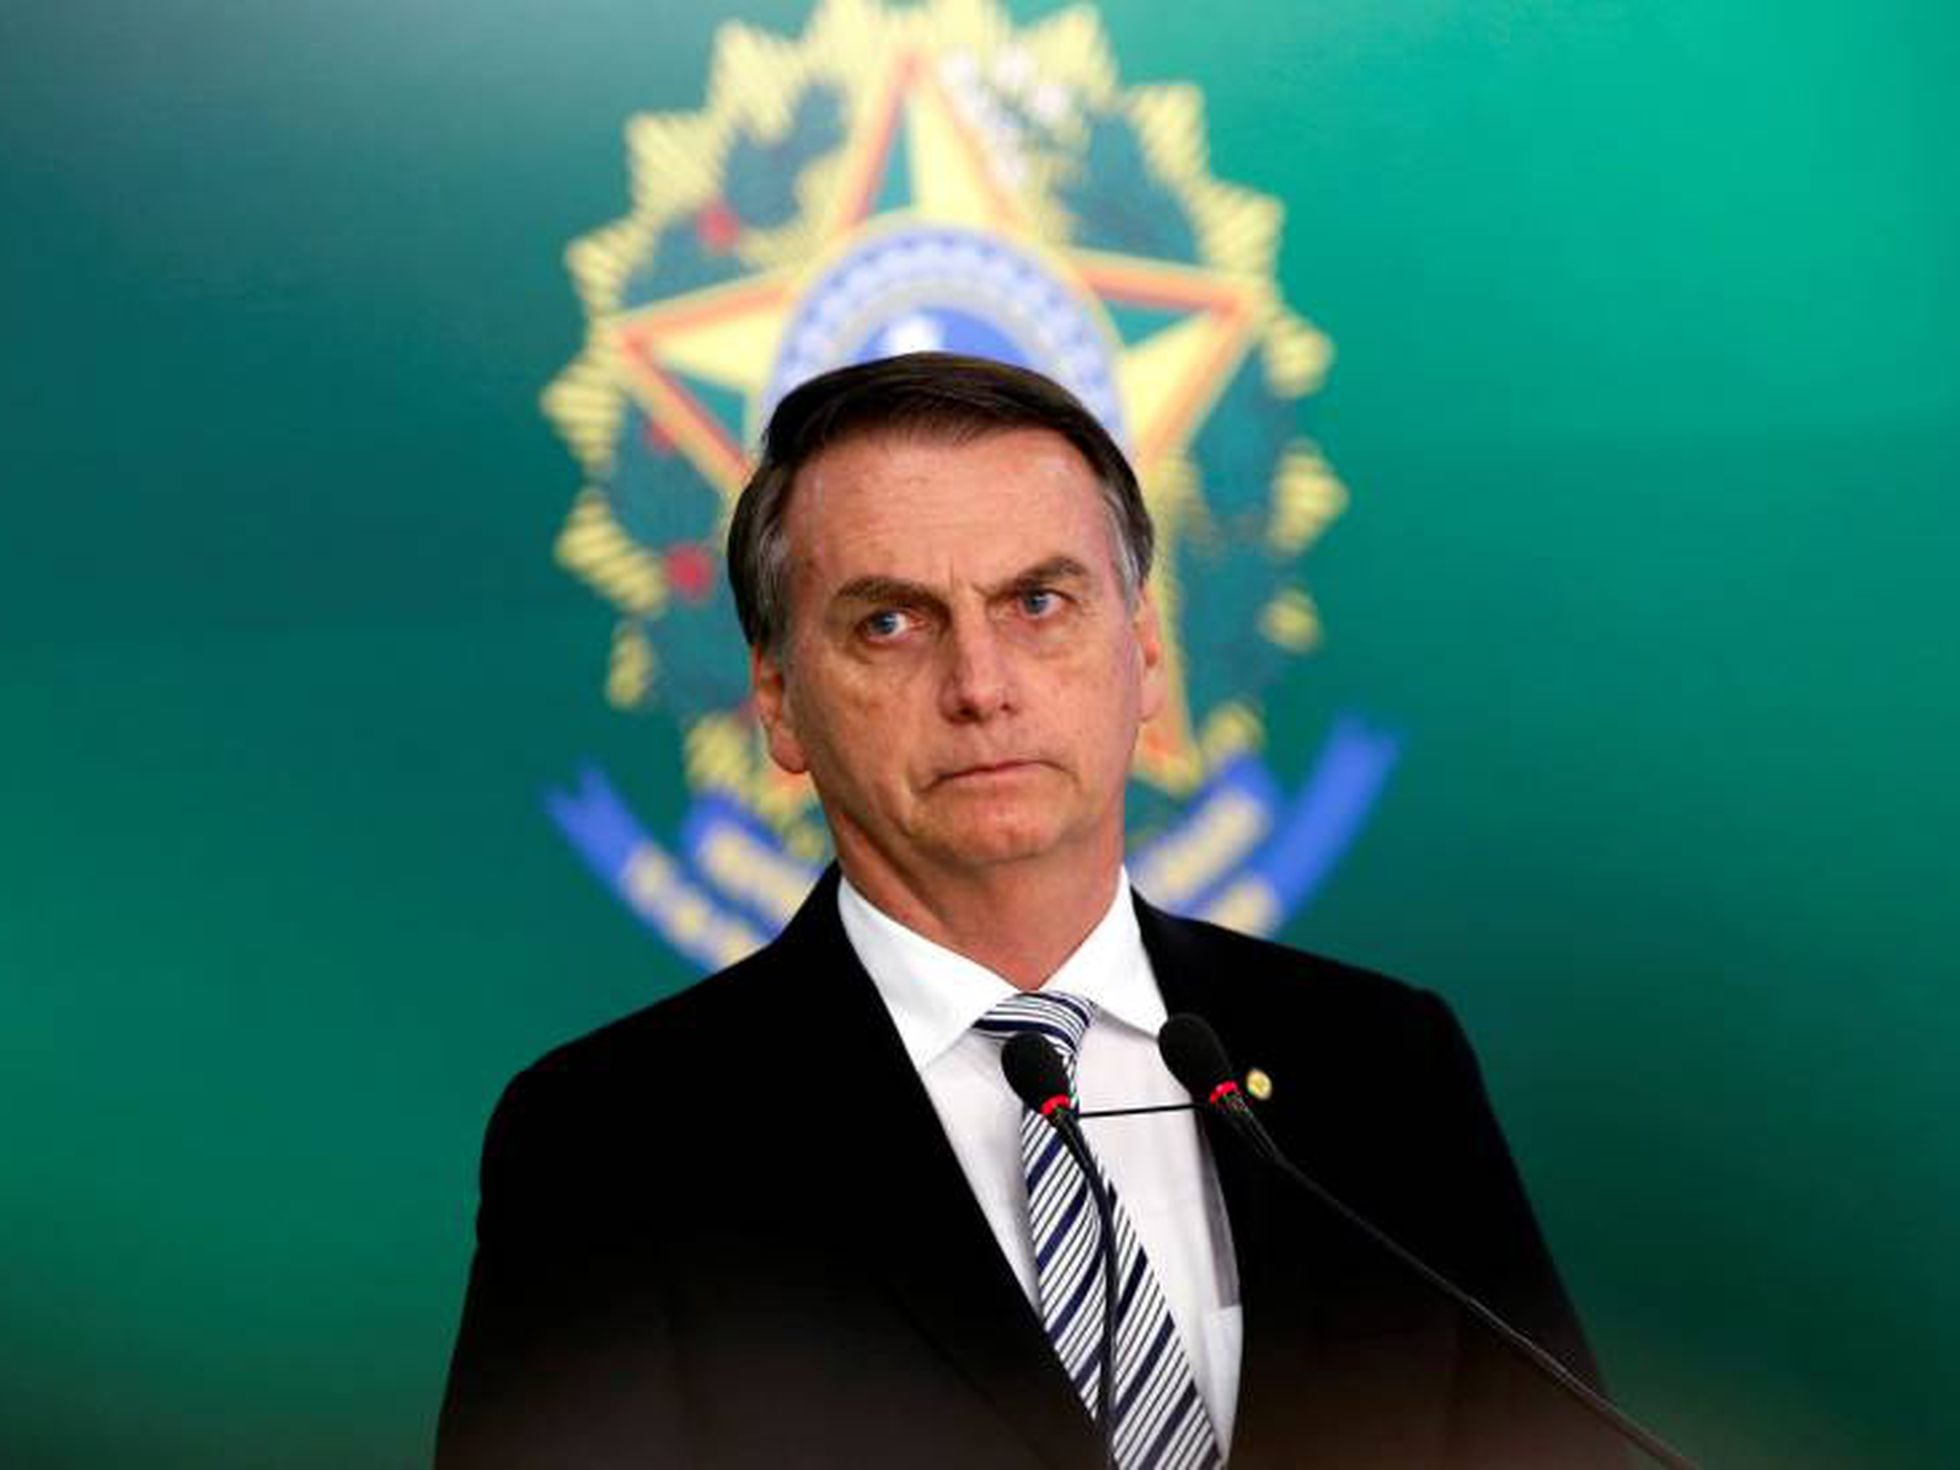 A desesperada narrativa da esquerda para tentar desconstruir Bolsonaro  repete 2018